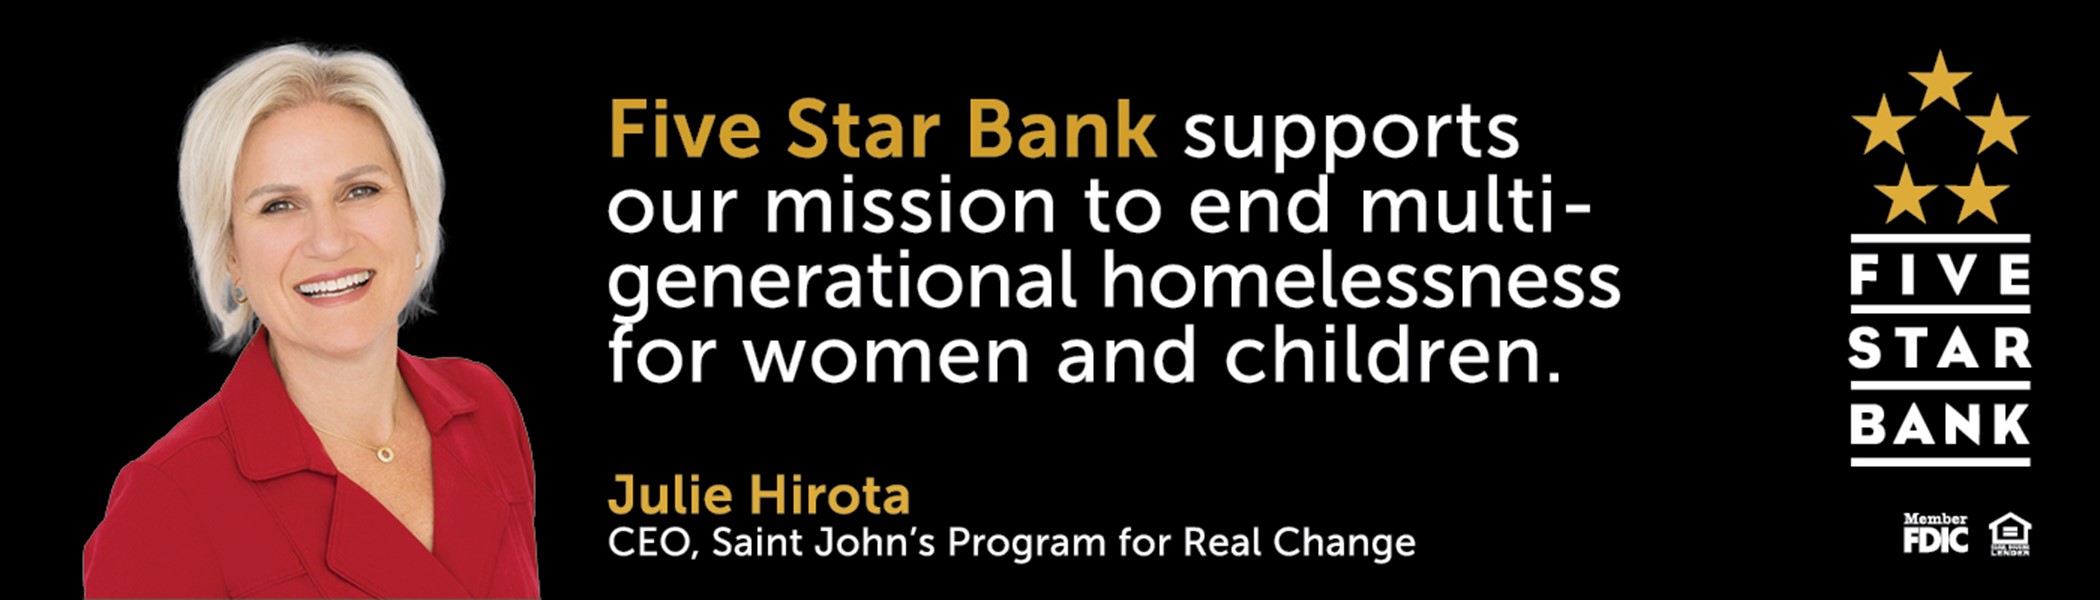 Billboard featuring Julie Hirota, CEO, Saint John's Program for Real Change